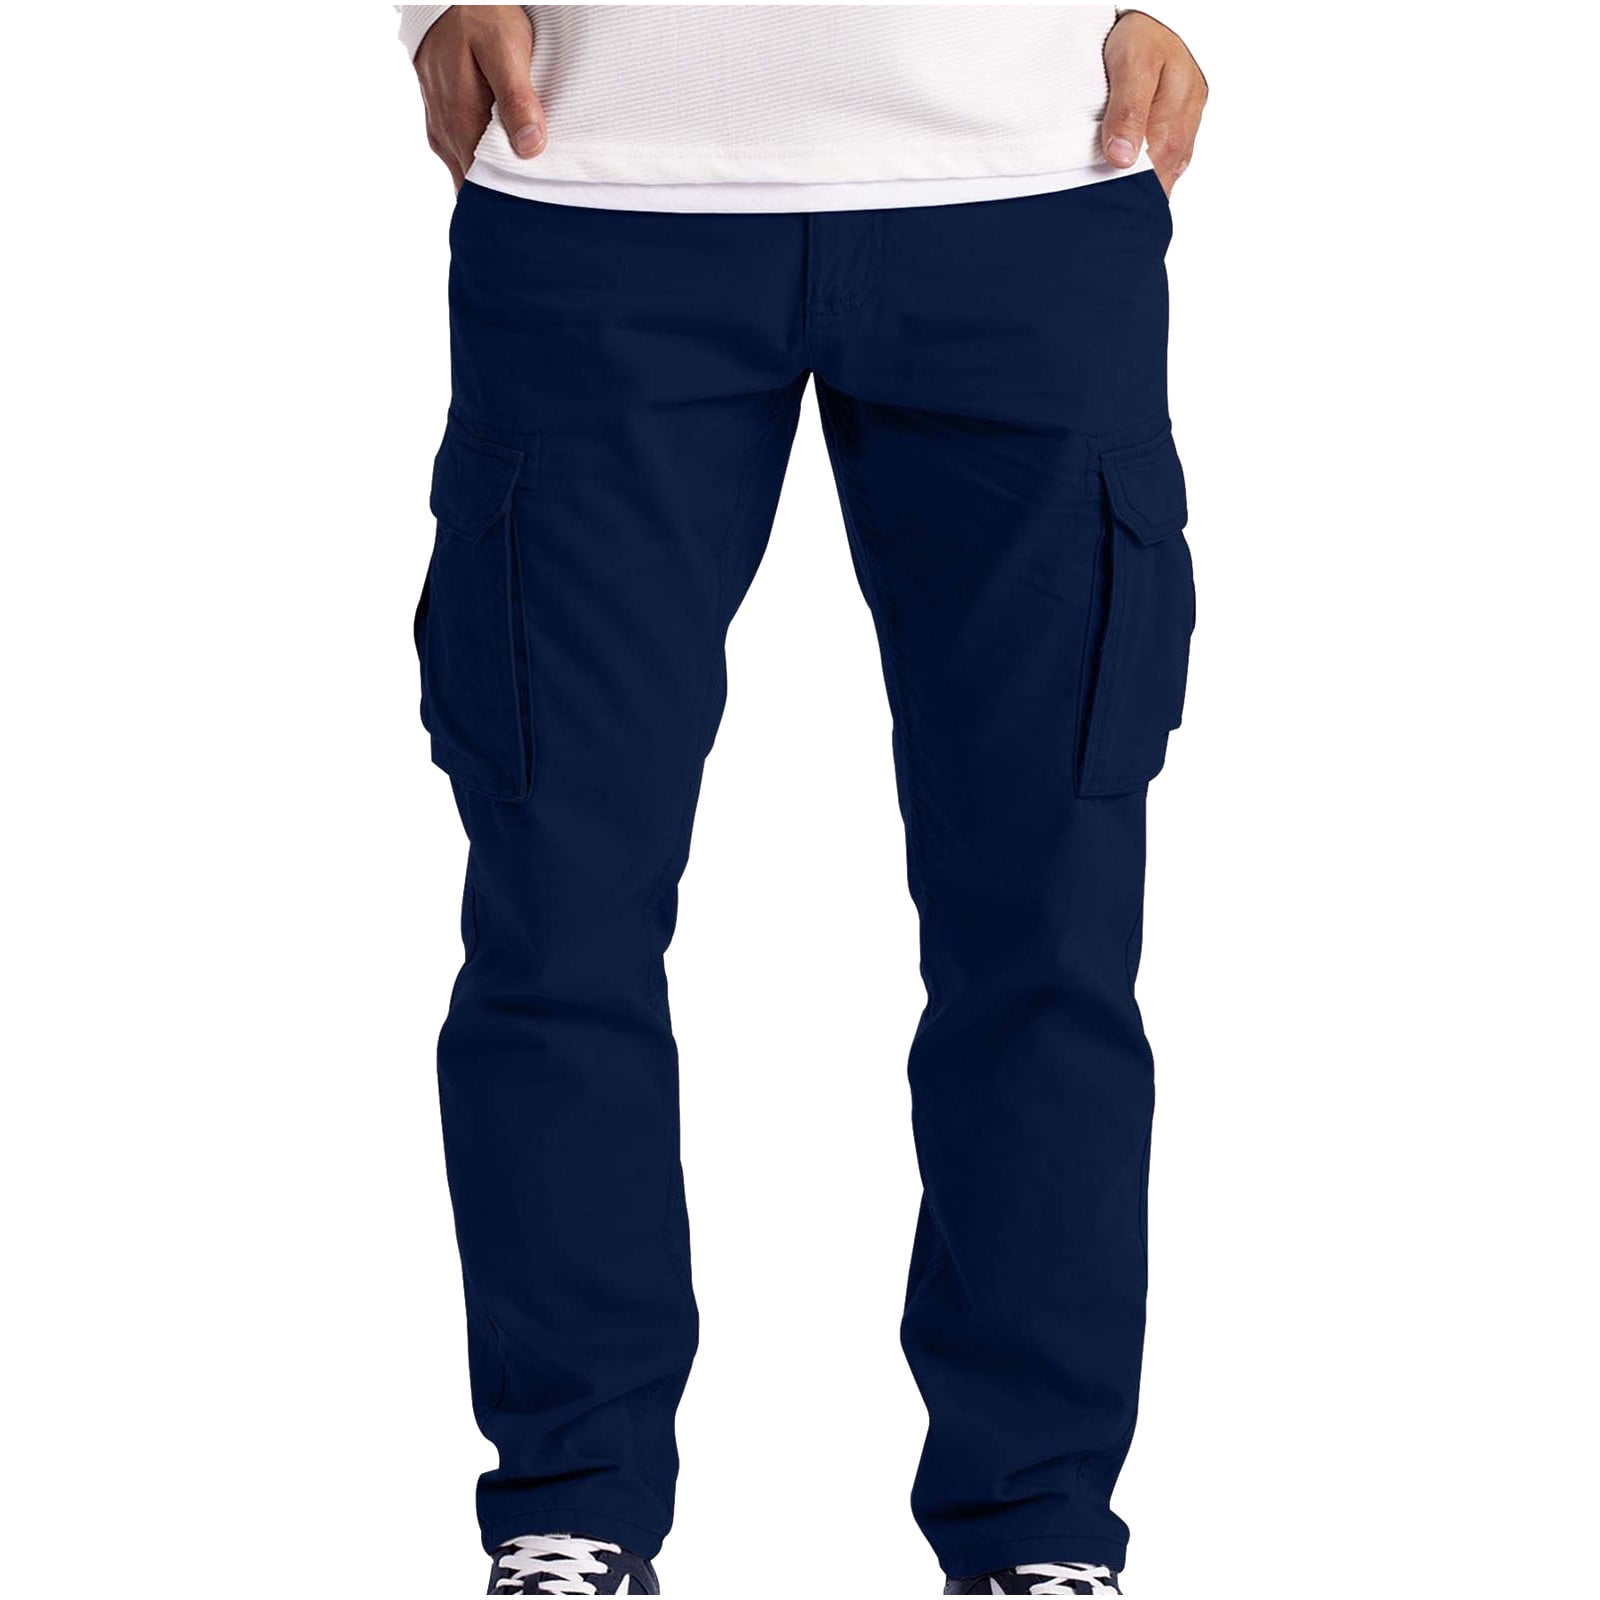 Jack & Jones Mens Casual Cotton Anti Fit Cargo Khaki Army Trousers Pants